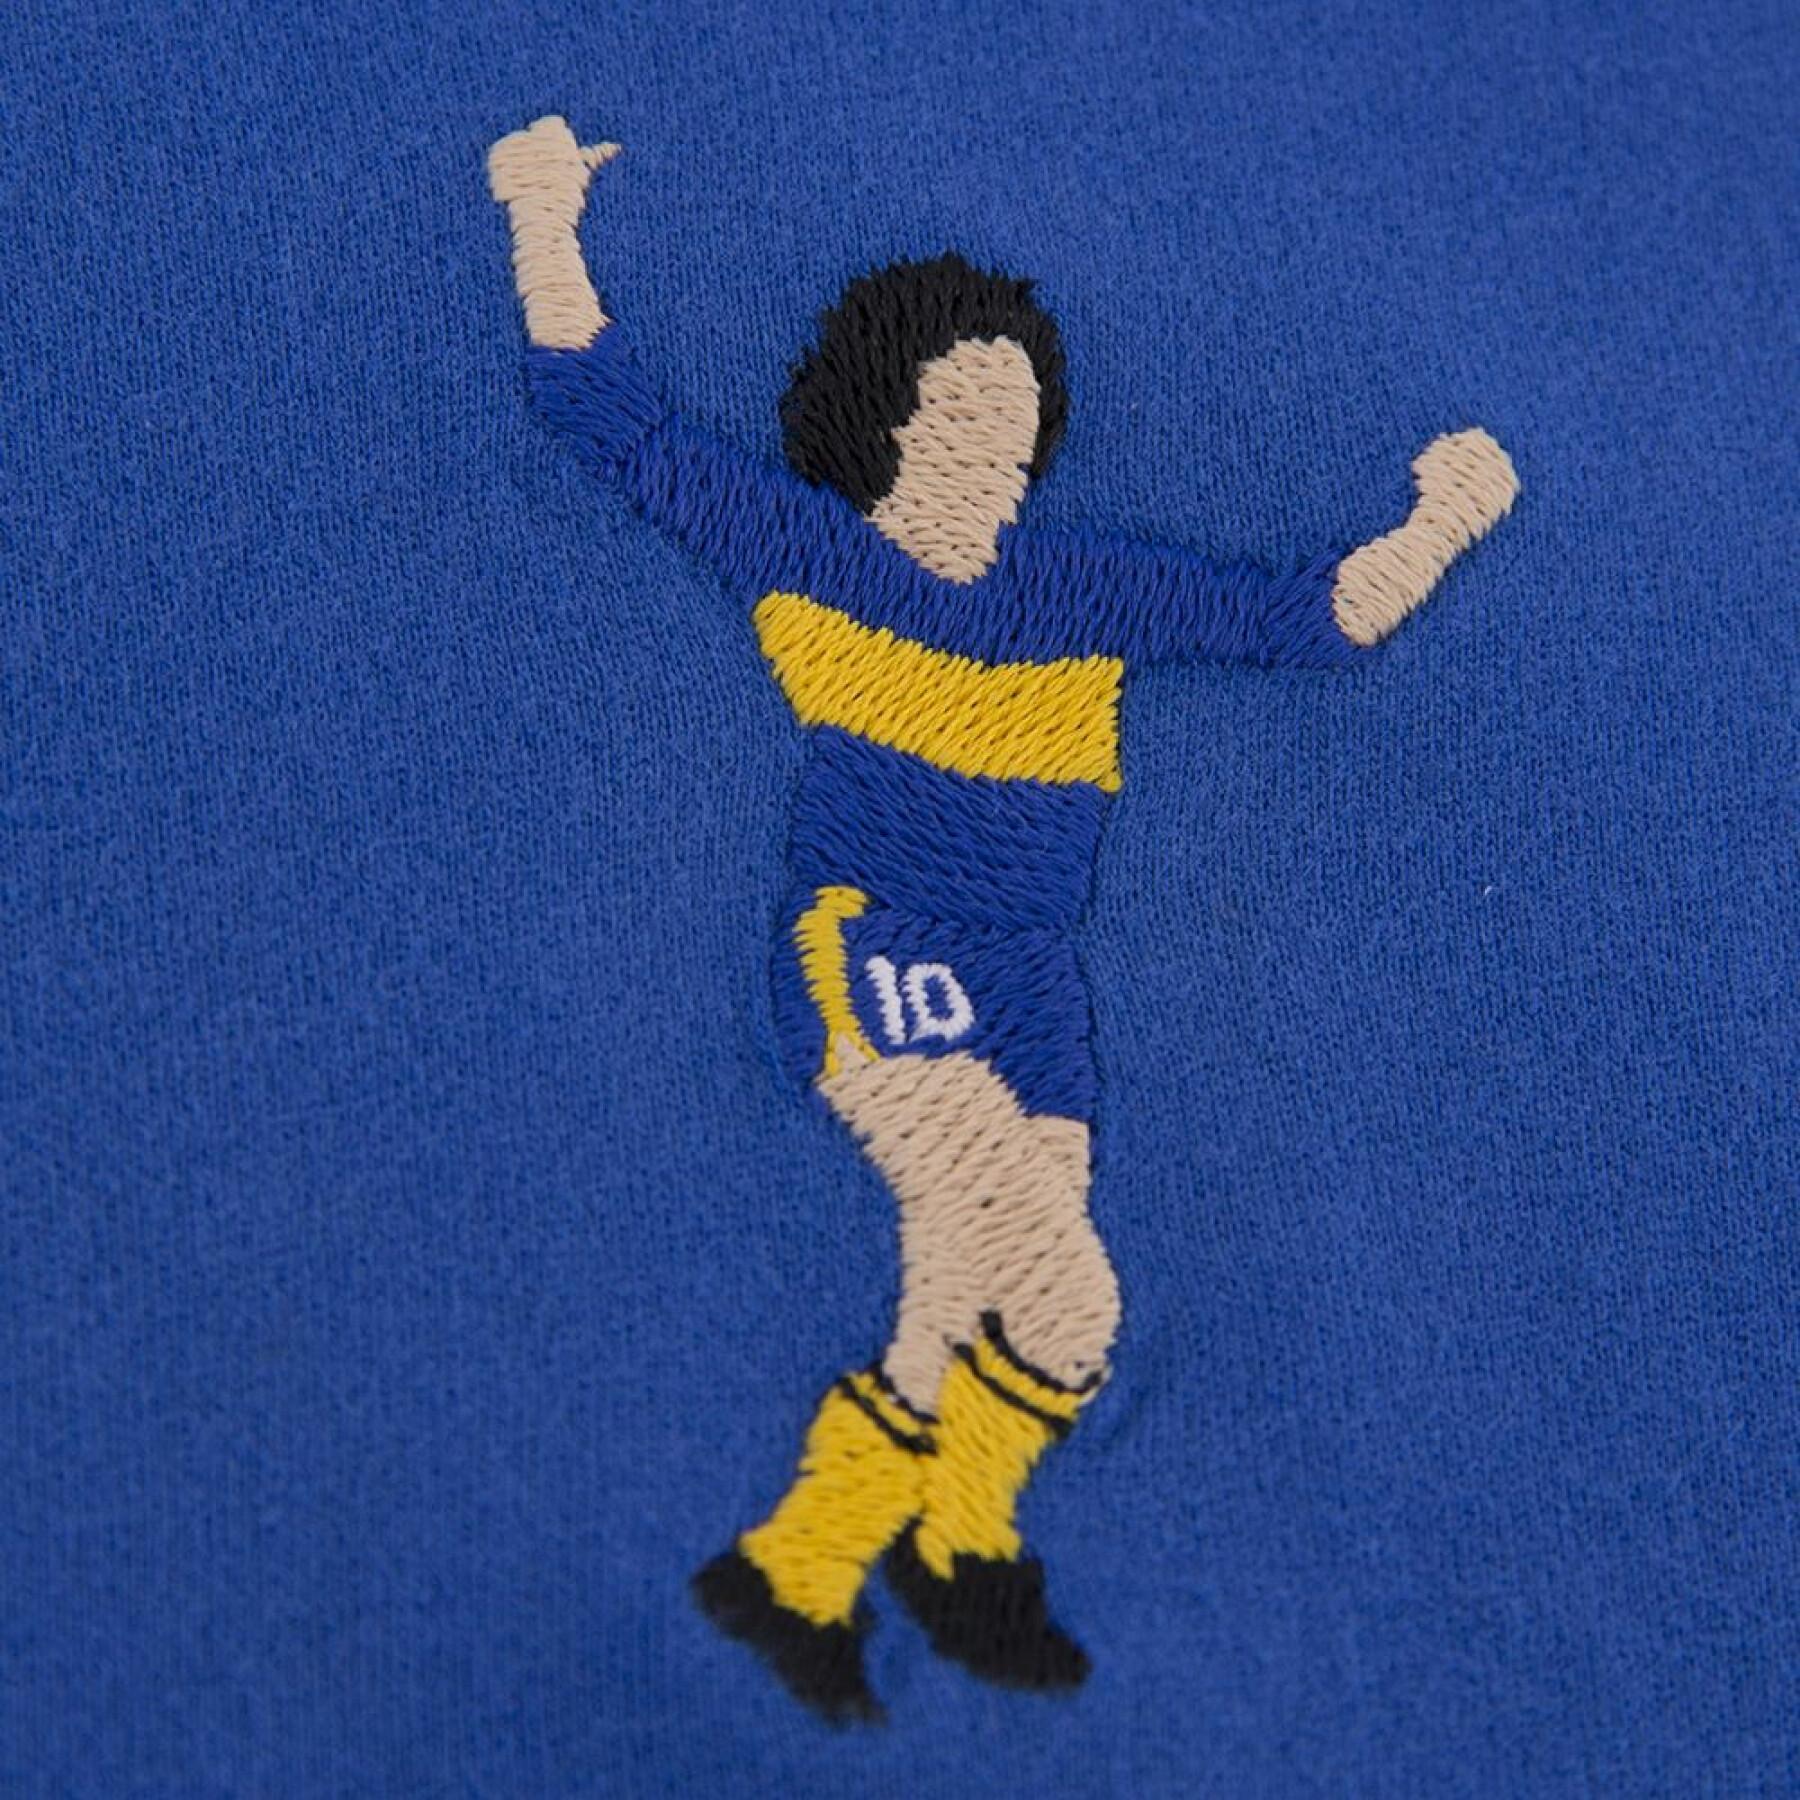 Camiseta bordada Copa Boca Juniors Maradona